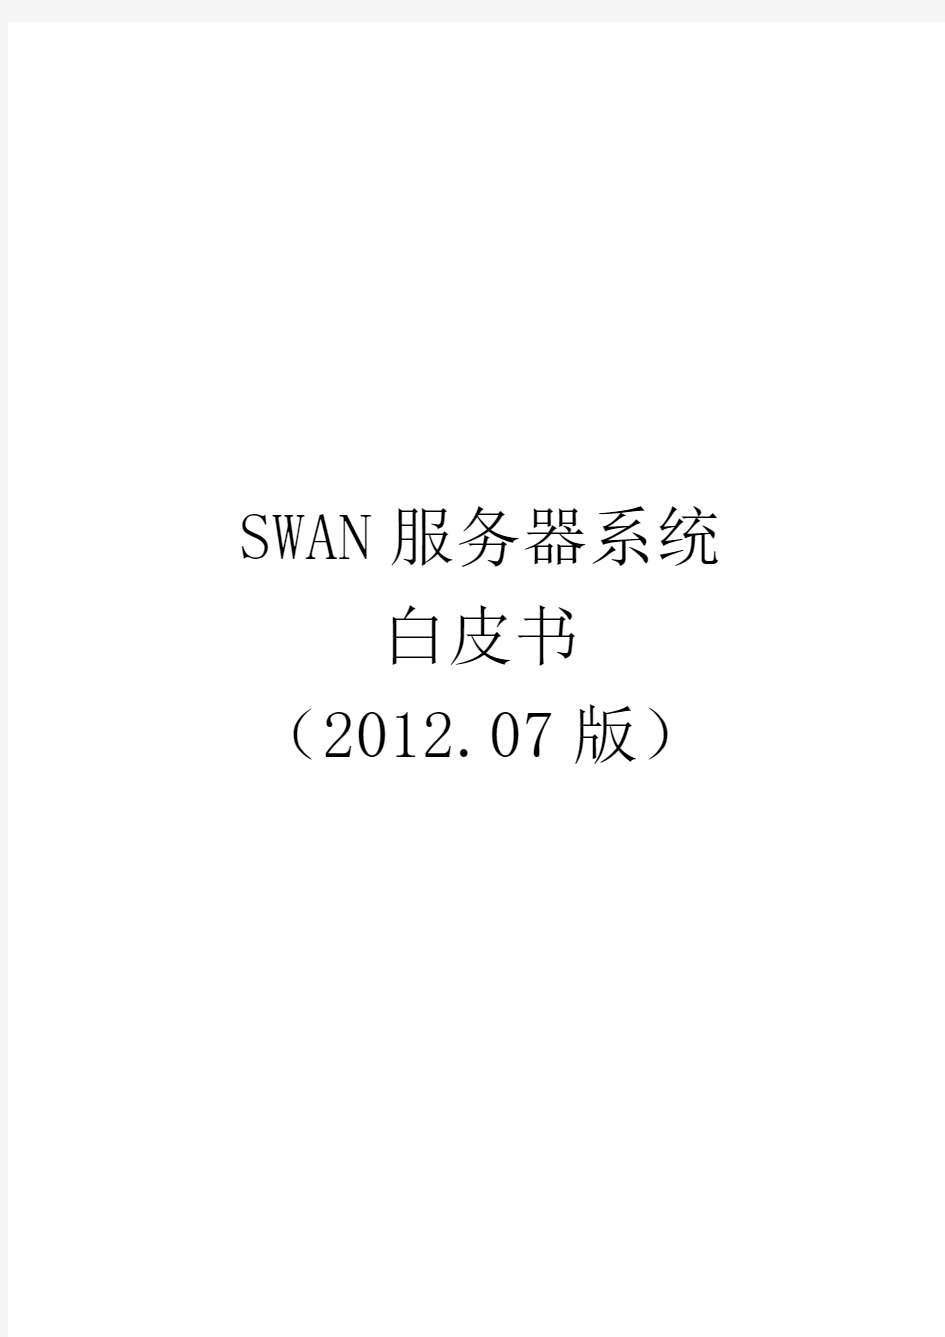 SWAN服务器系统白皮书教学教材